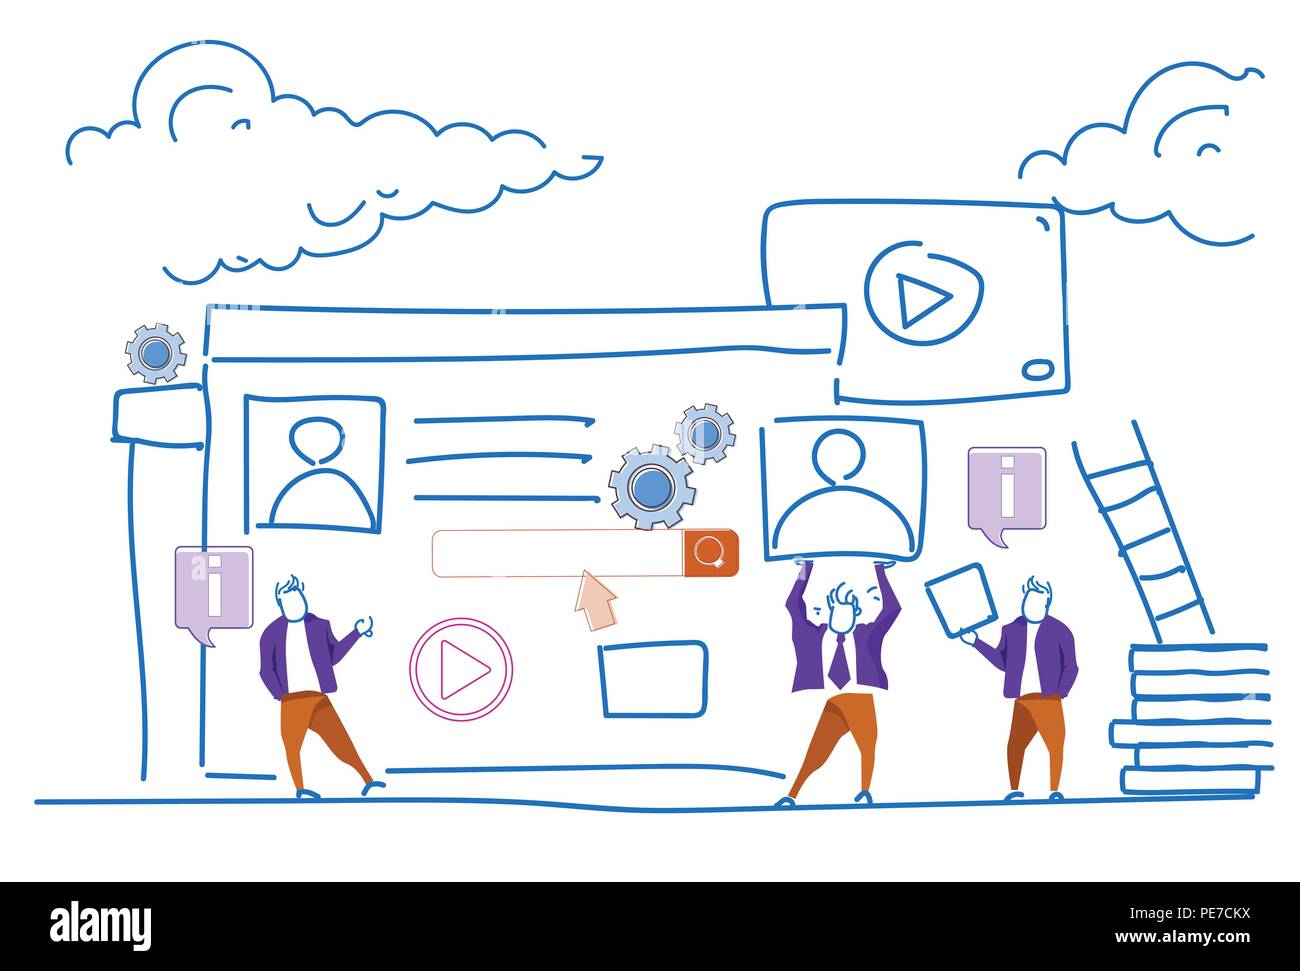 media player online video webinar profile concept business people working together sketch doodle horizontal Stock Vector